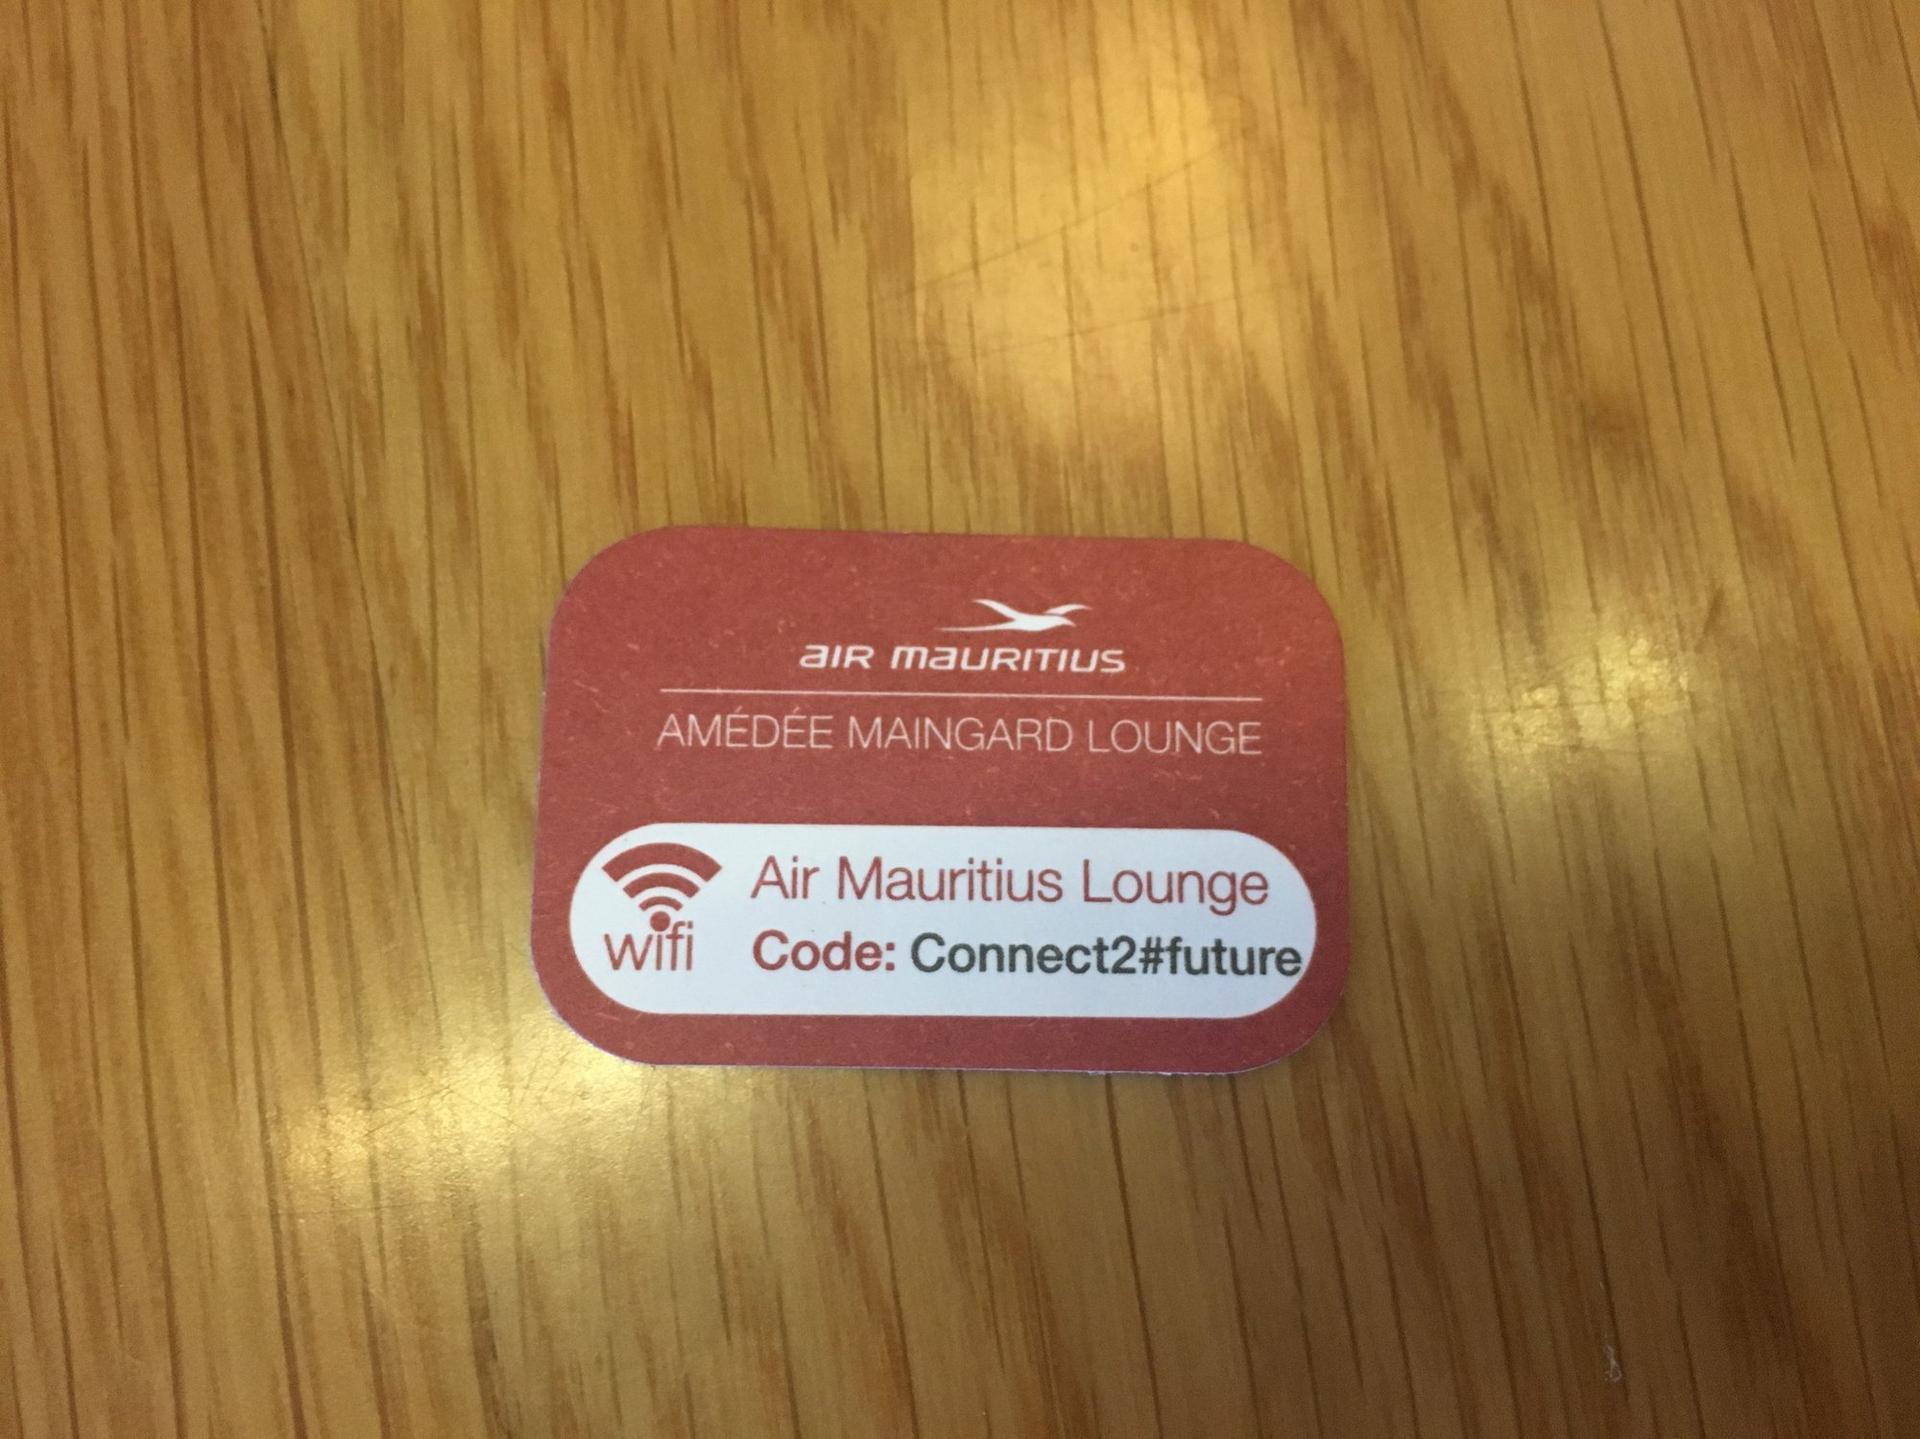 Air Mauritius Amedee Maingard Lounge image 34 of 43